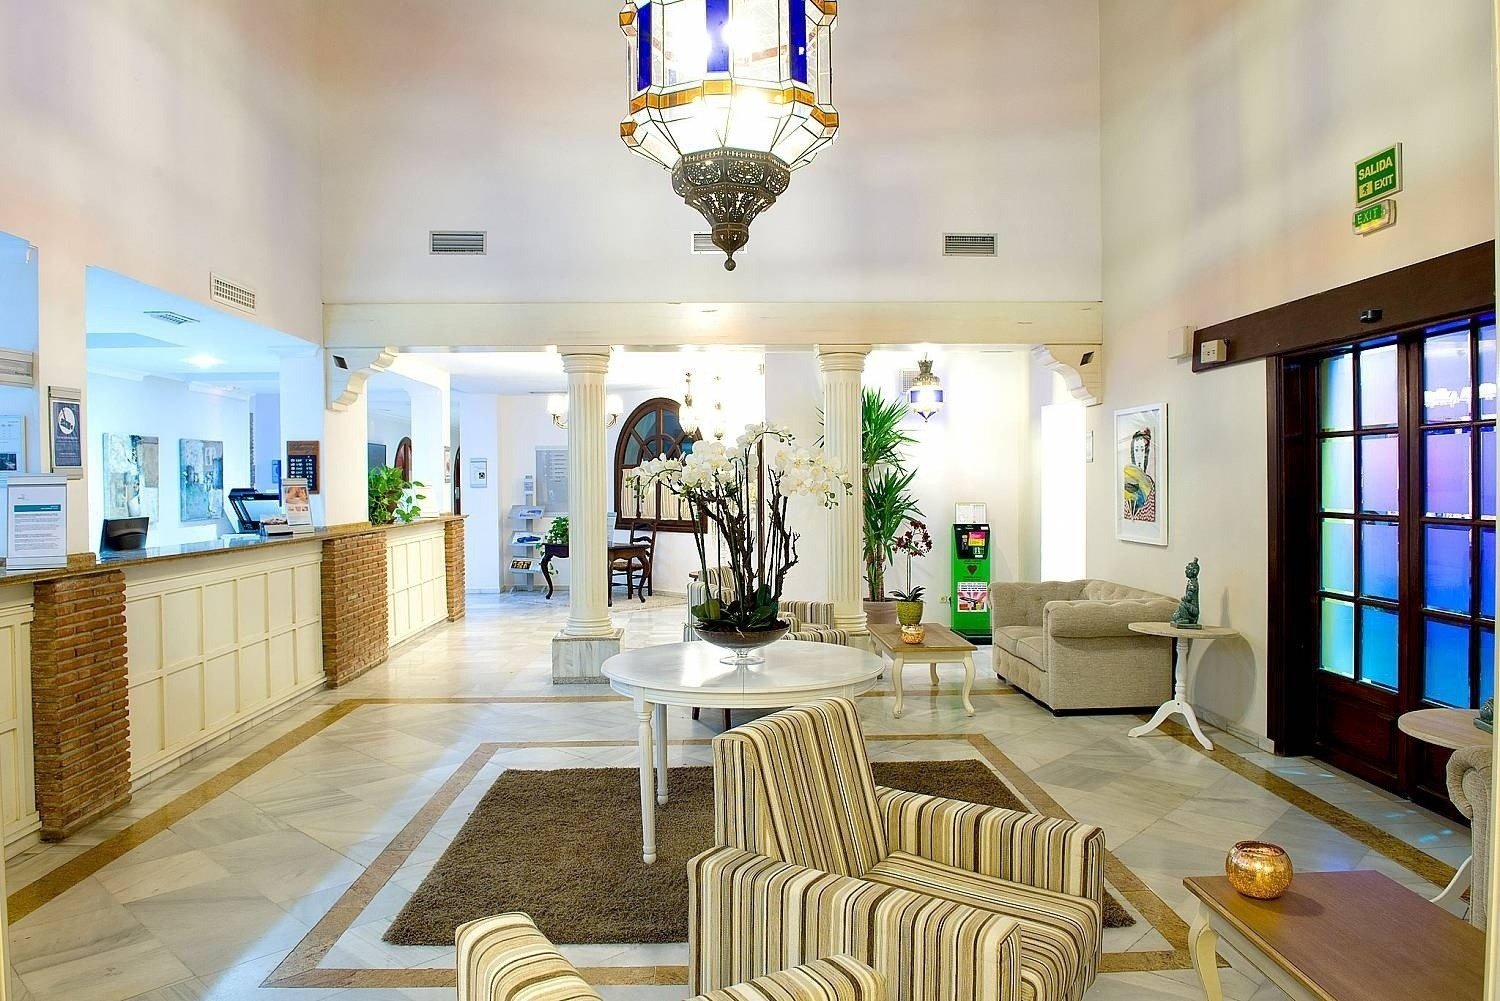 Lobby of the Hotel Ona Alanda Club Marbella